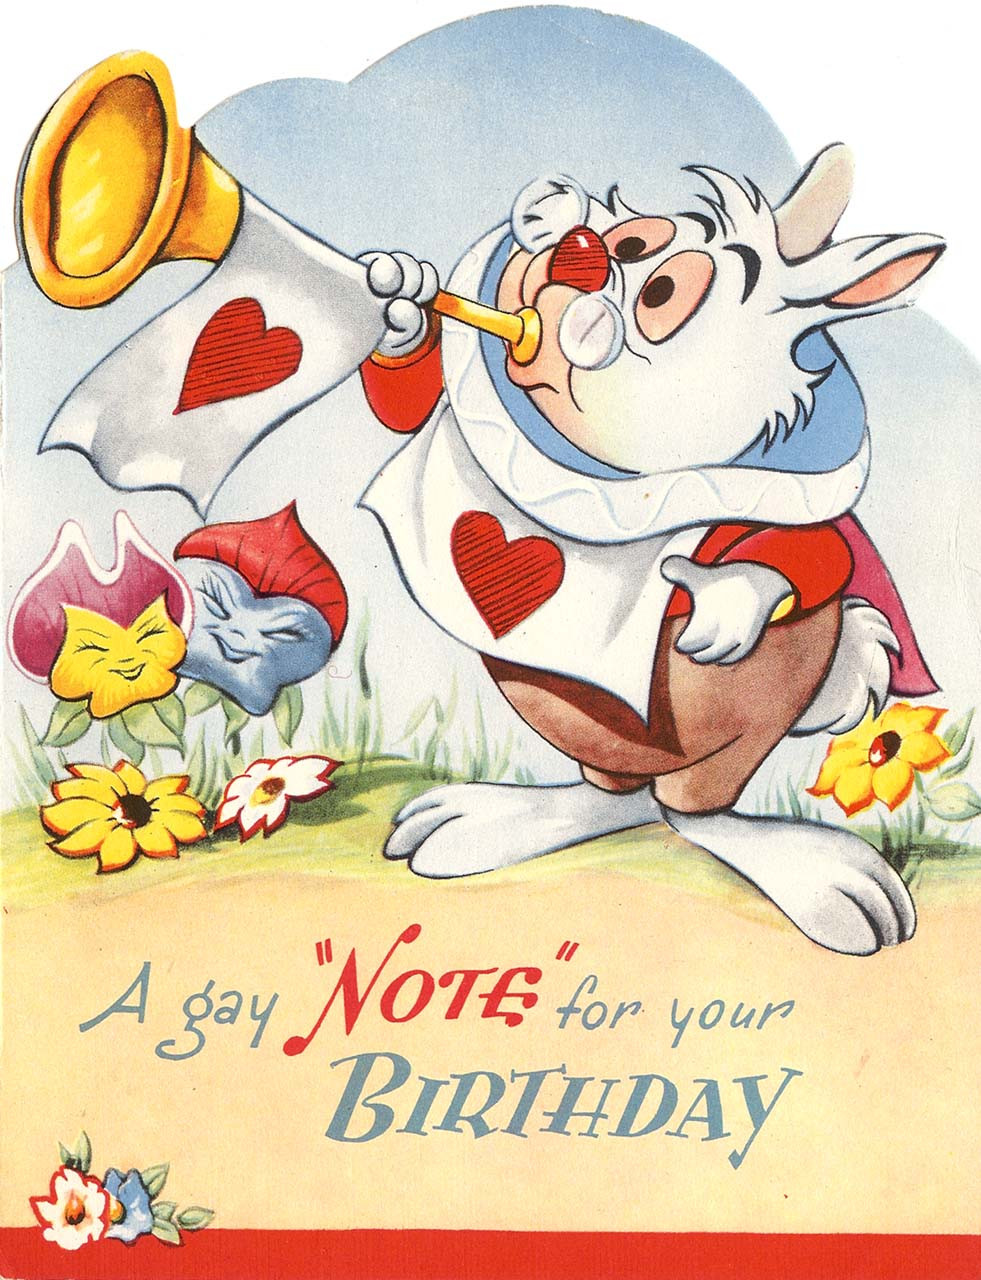 Alice In Wonderland Birthday Card
 Vintage Disney Alice in Wonderland English Birthday Card